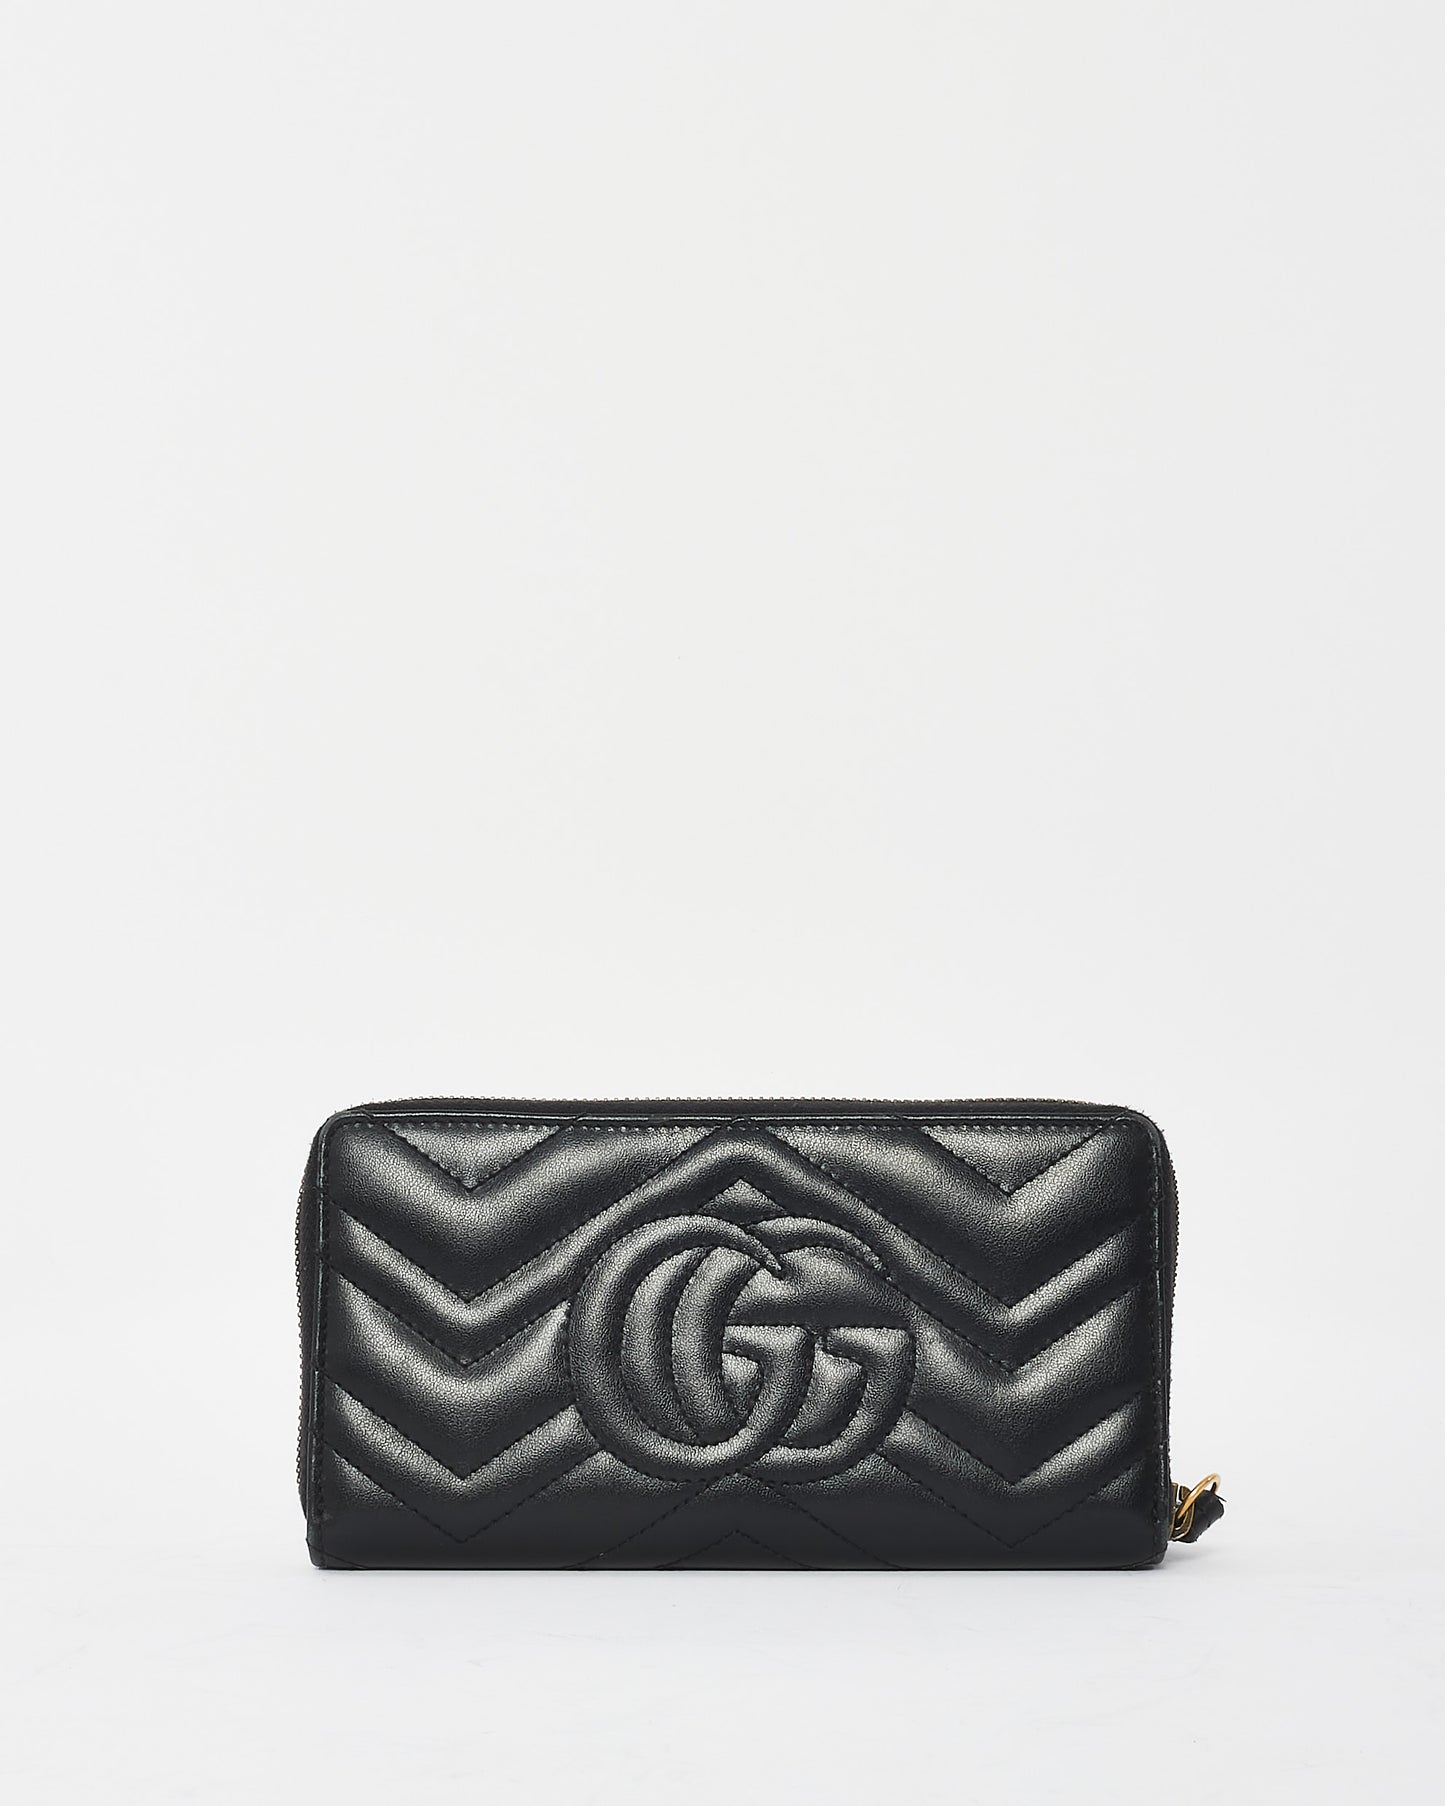 Gucci Black Matlasseé Leather GG Marmont Zip Around Wallet